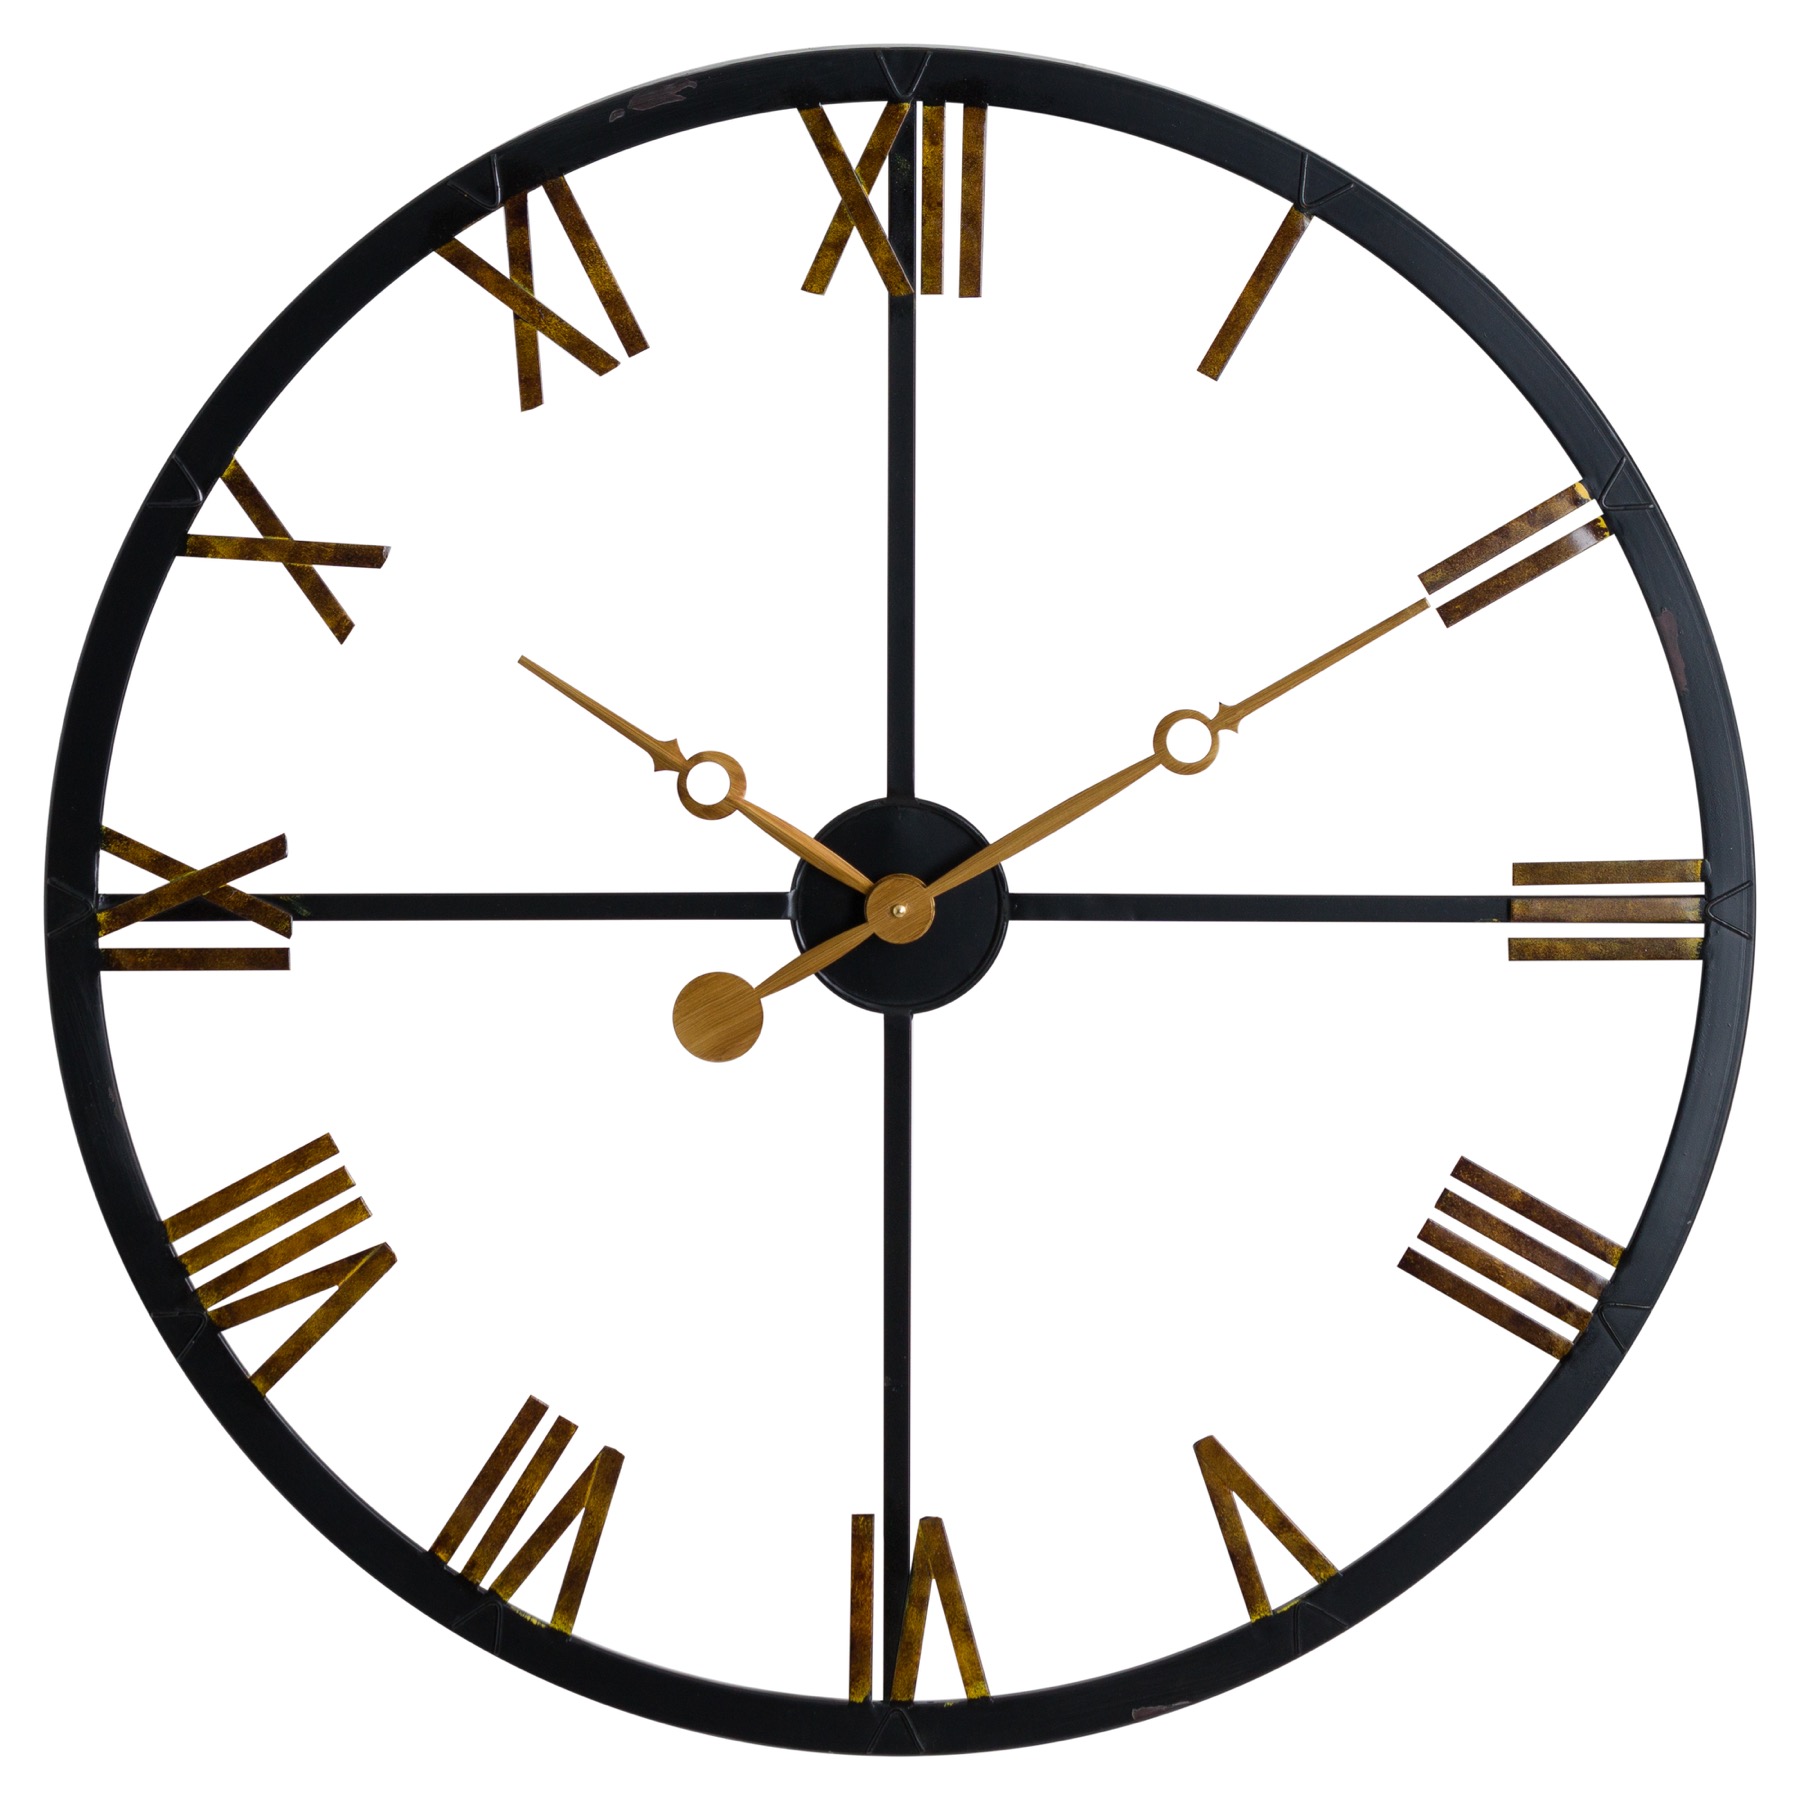 Distressed Black And Gold Skeleton Station Clock - Image 1